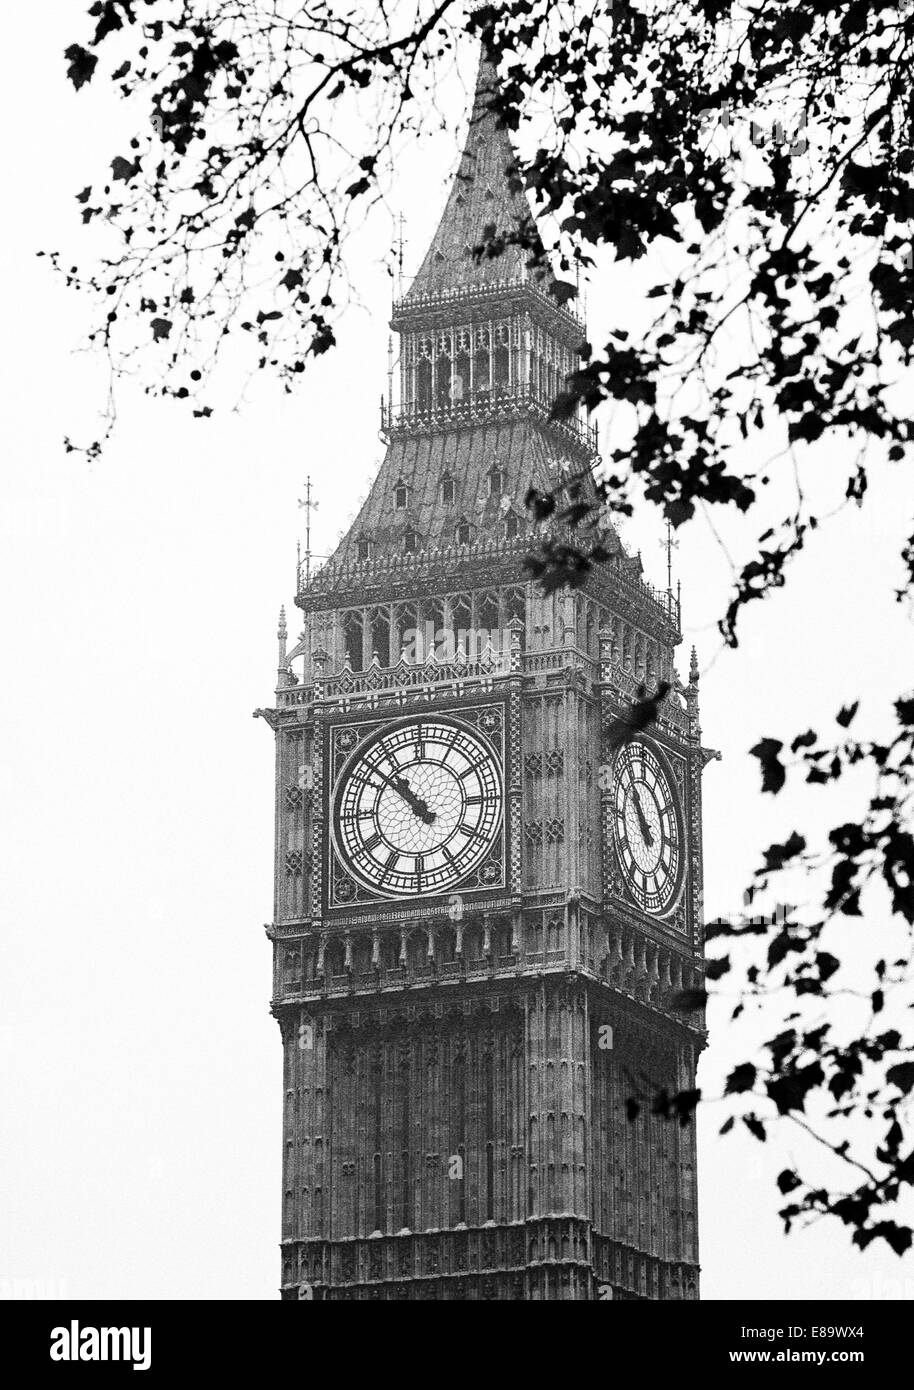 Siebziger Jahre, Großbritannien, England, GB-London, Palace of Westminster, Elizabeth Tower Clock Tower mit Big Ben bell, Neo-Gotik, UNESCO-Weltkulturerbe Stockfoto